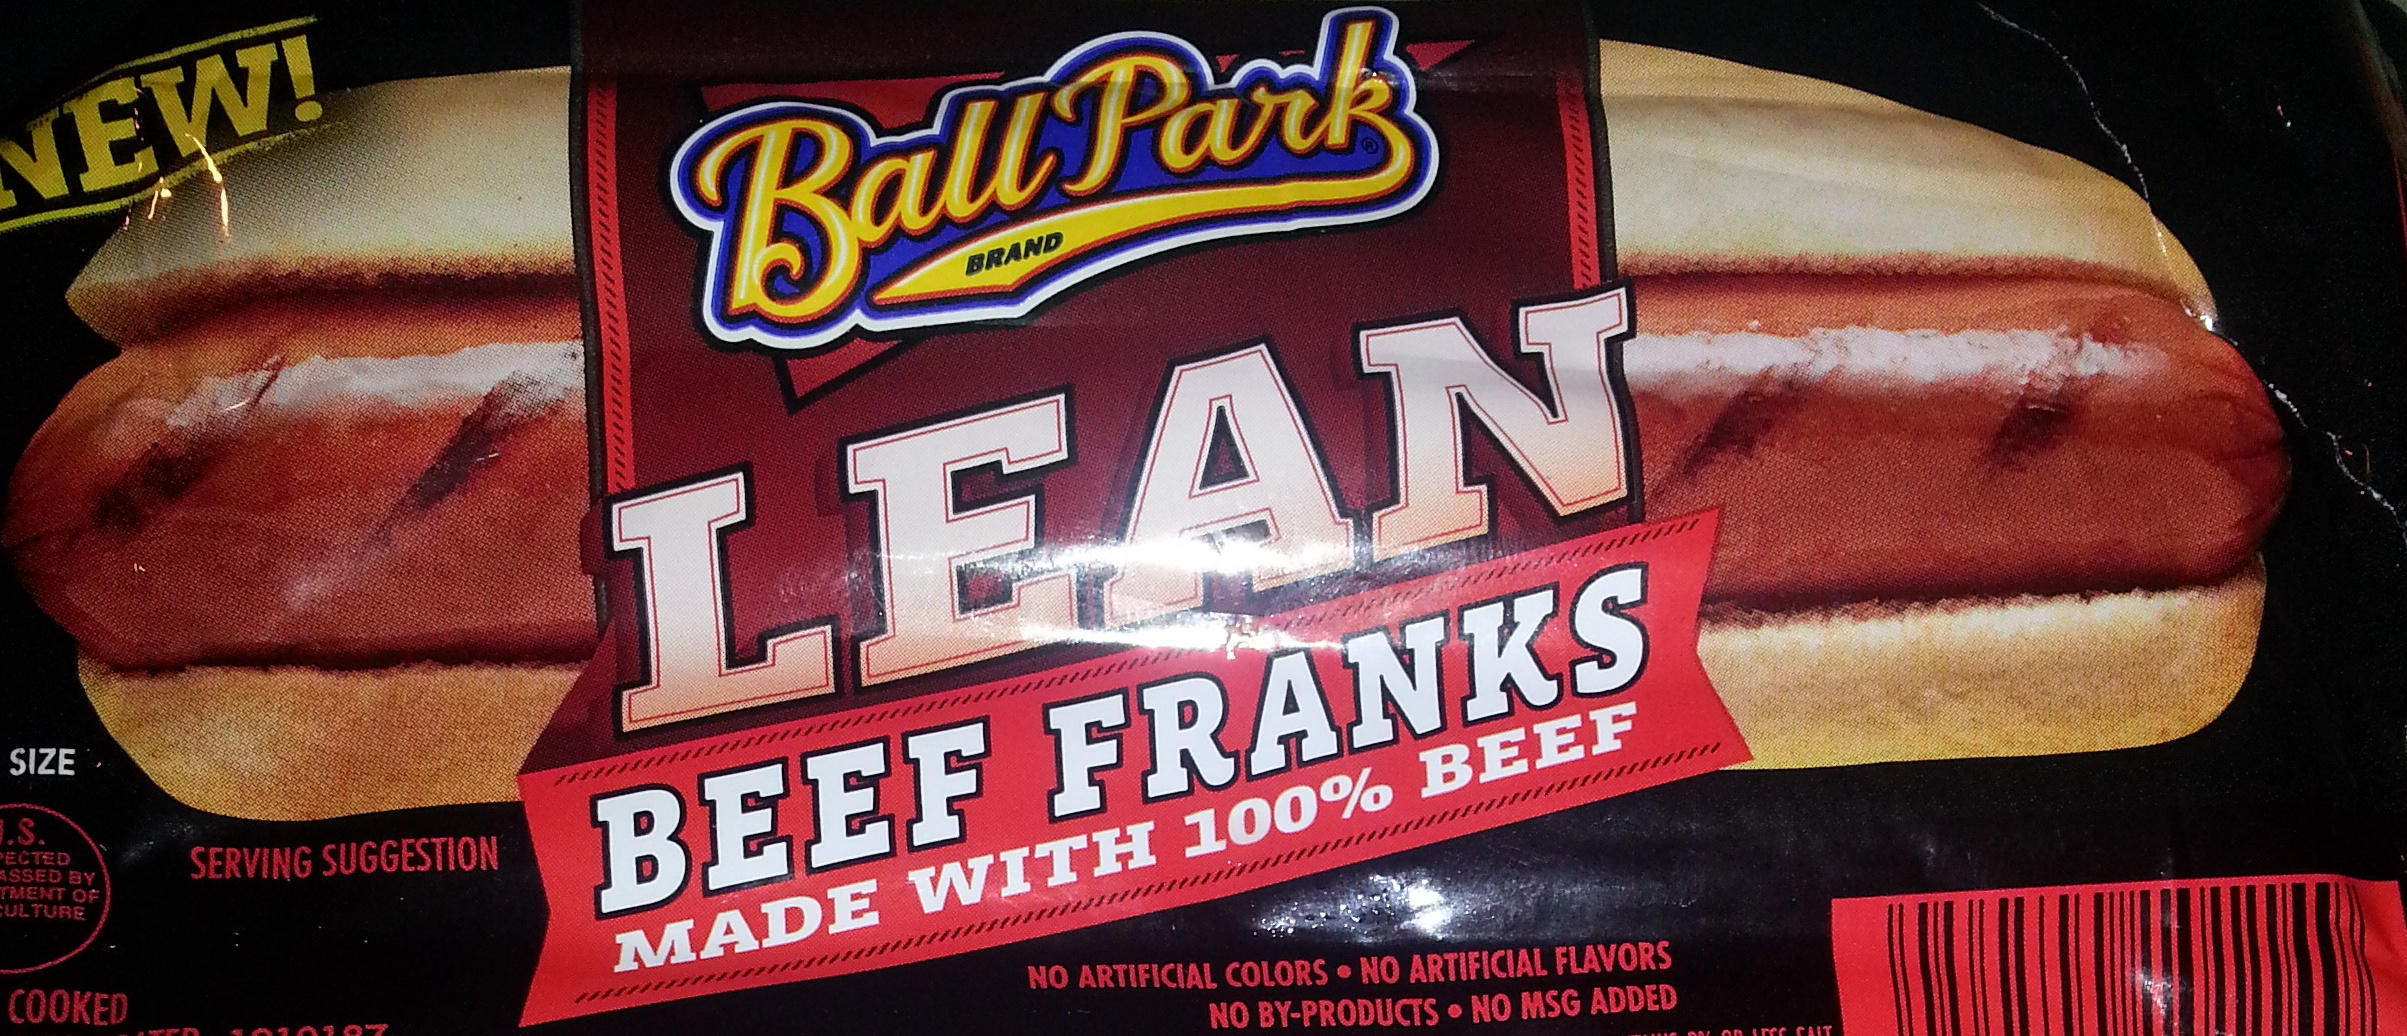 Ball park, lean beef franks - Product - en